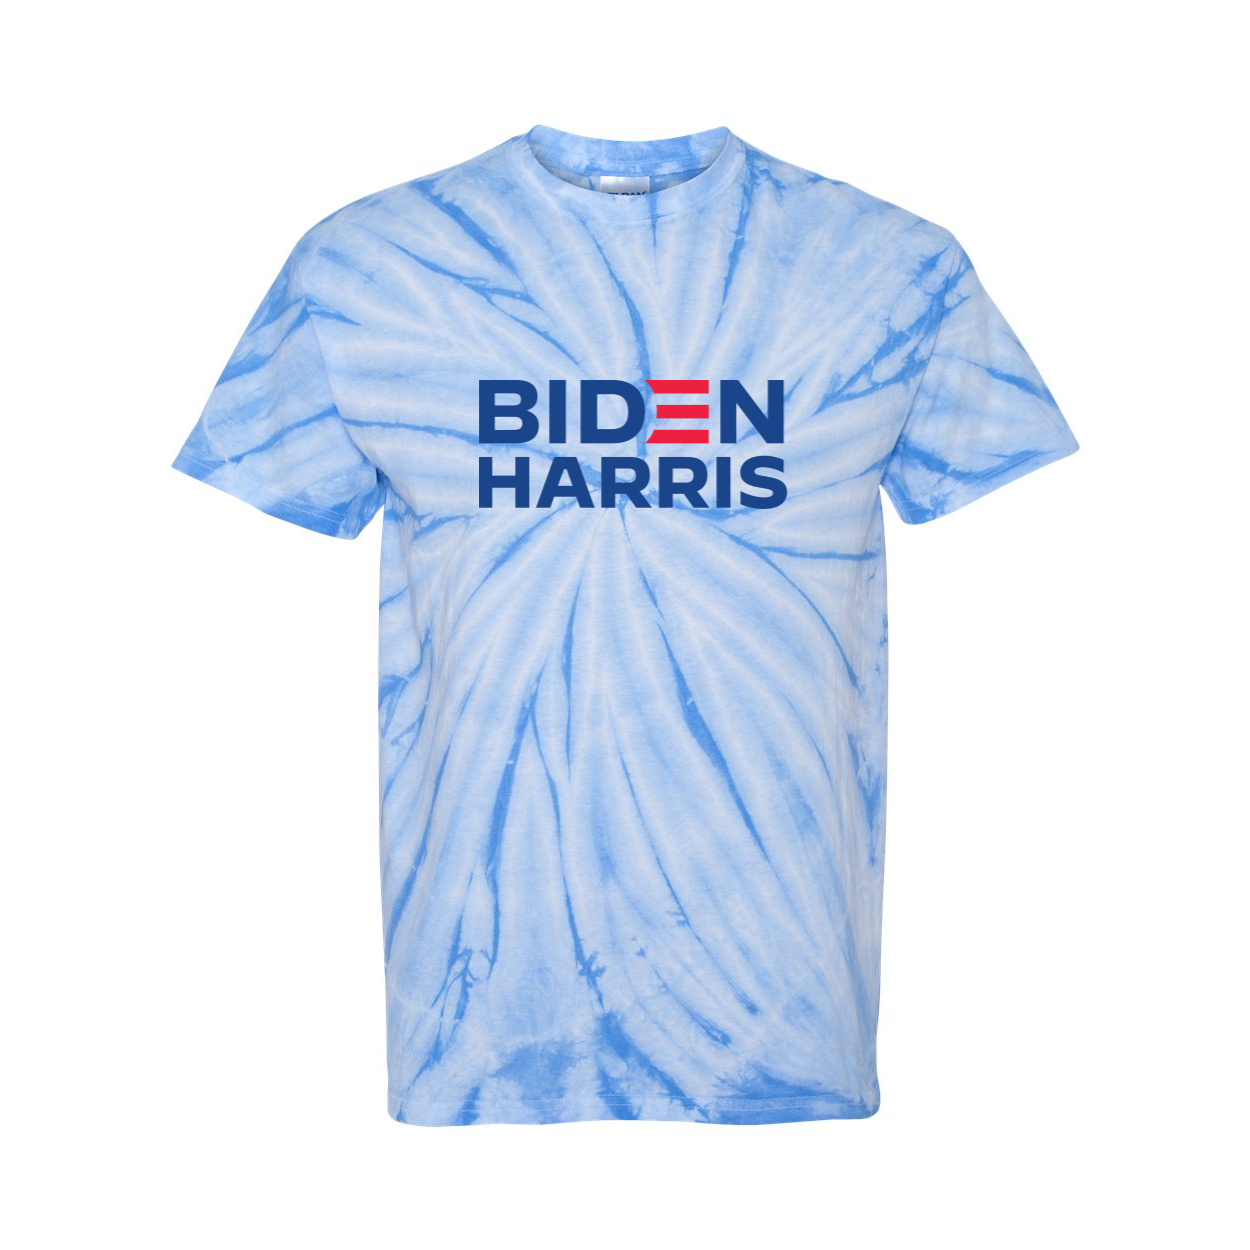 Biden Harris Campaign Logo Tie-Dye T-Shirt